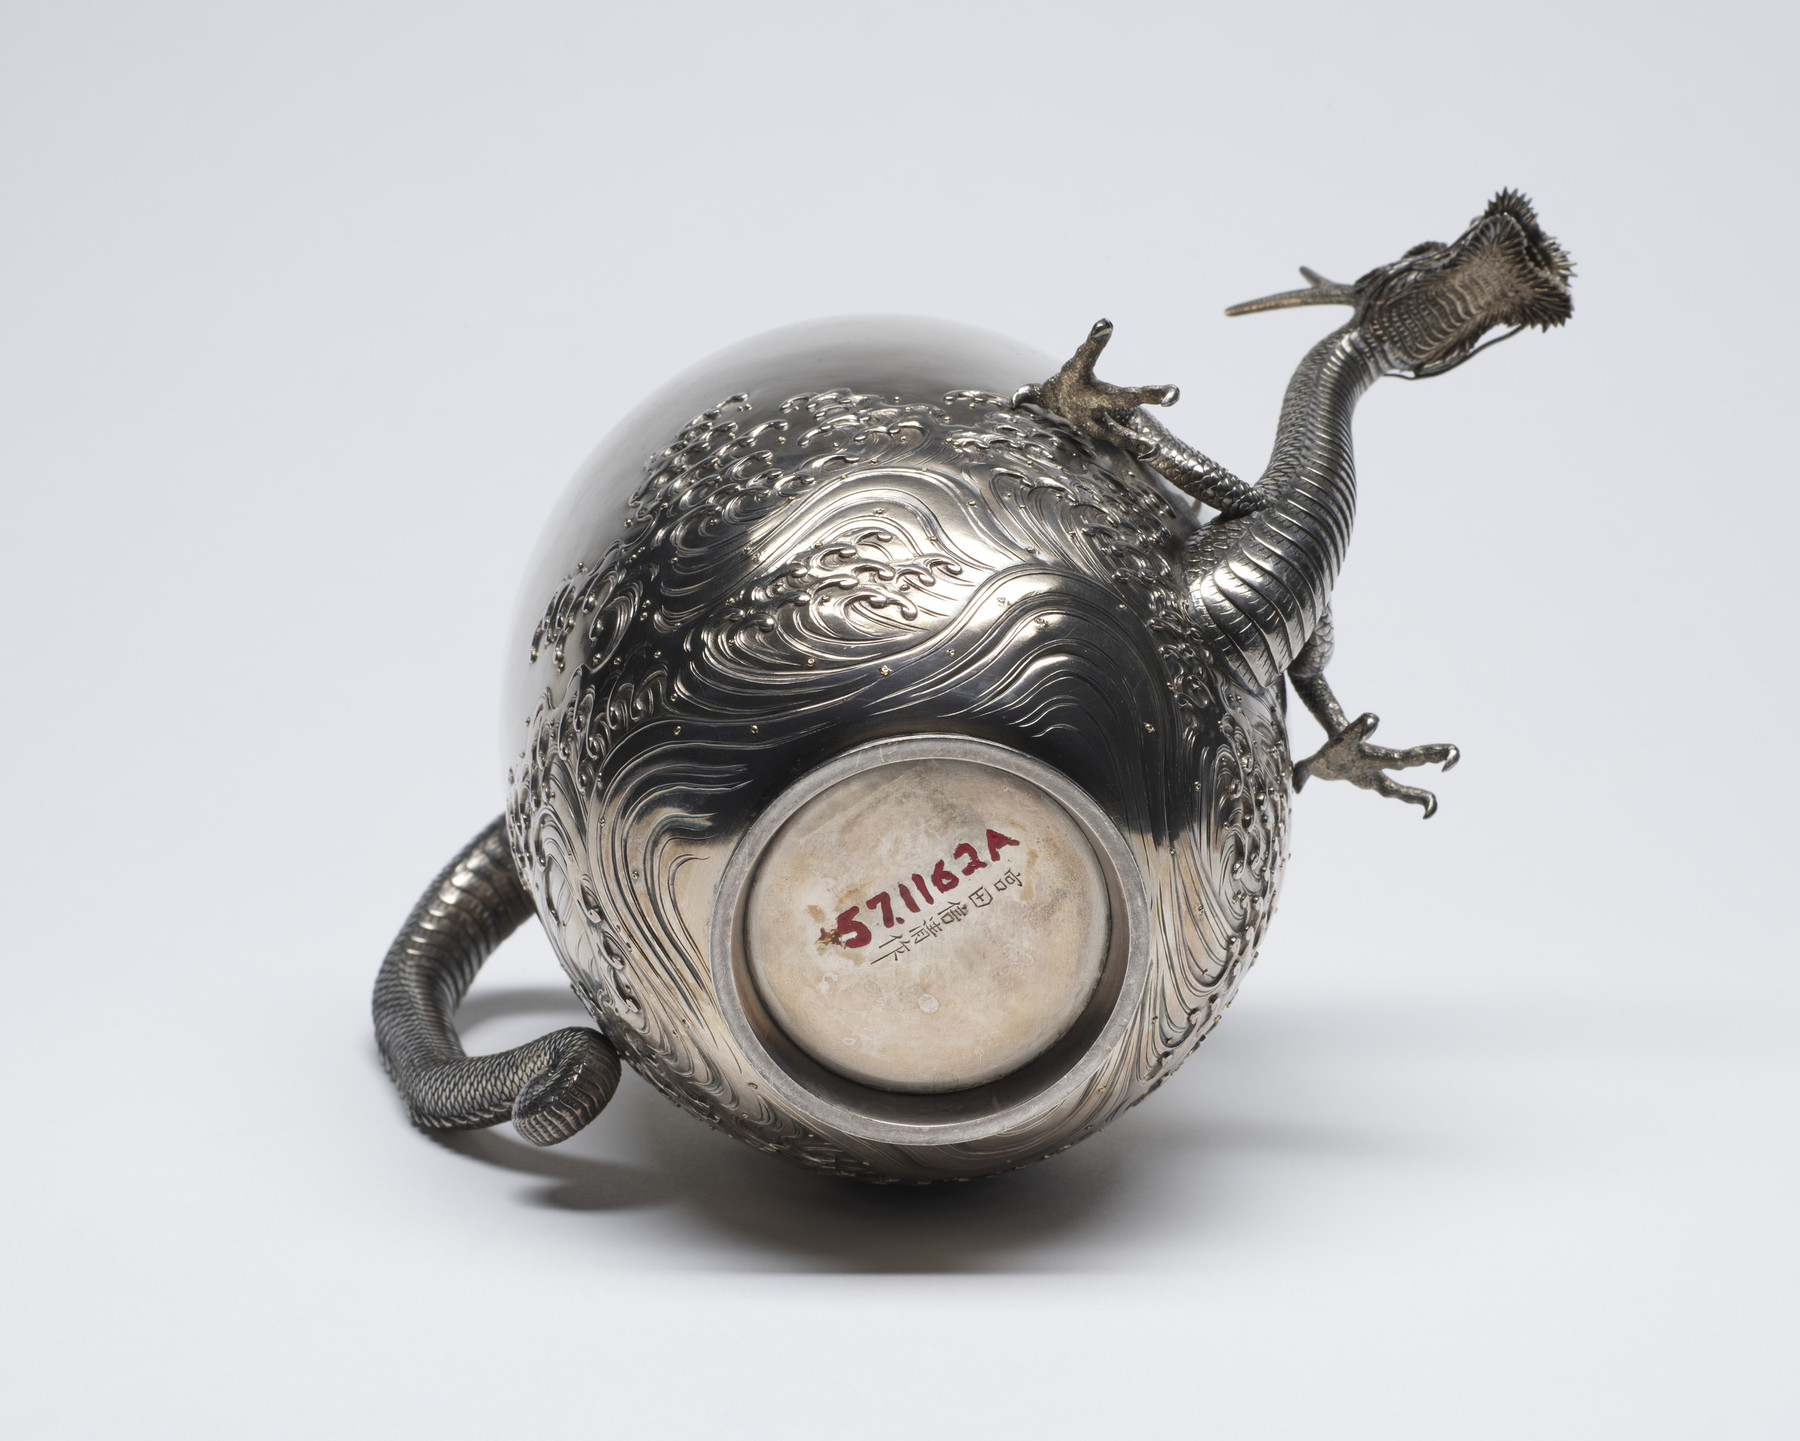 Image for Dragon Teapot